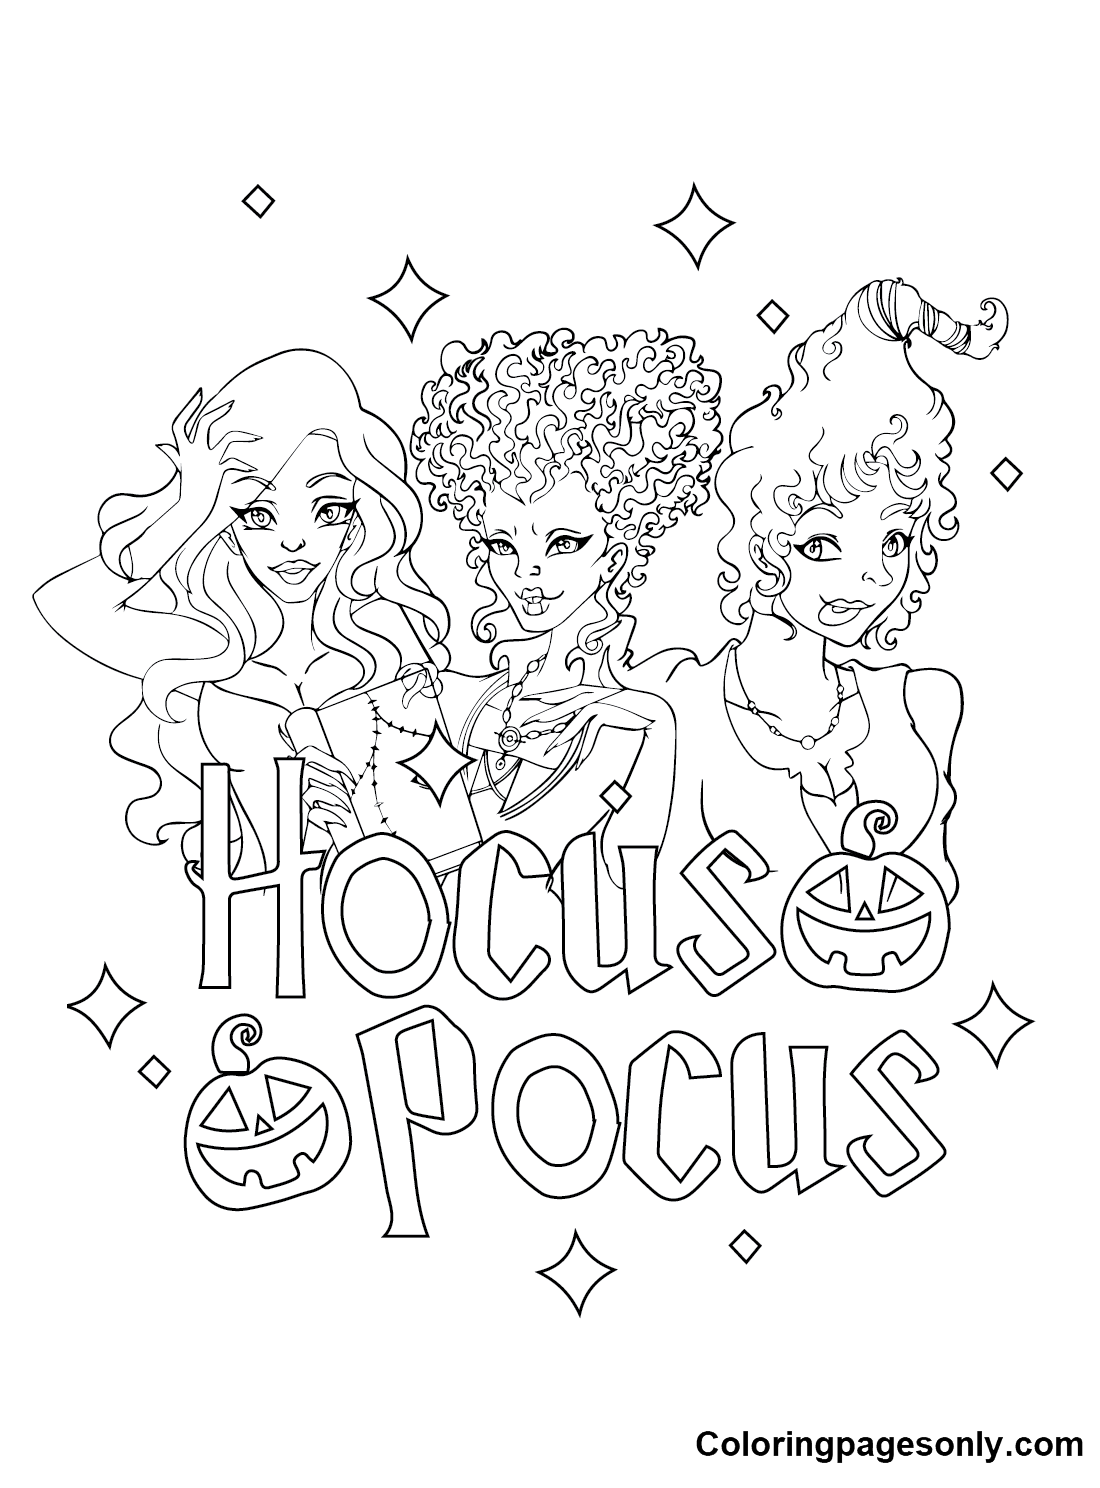 Hocus Pocus Images Coloring Pages